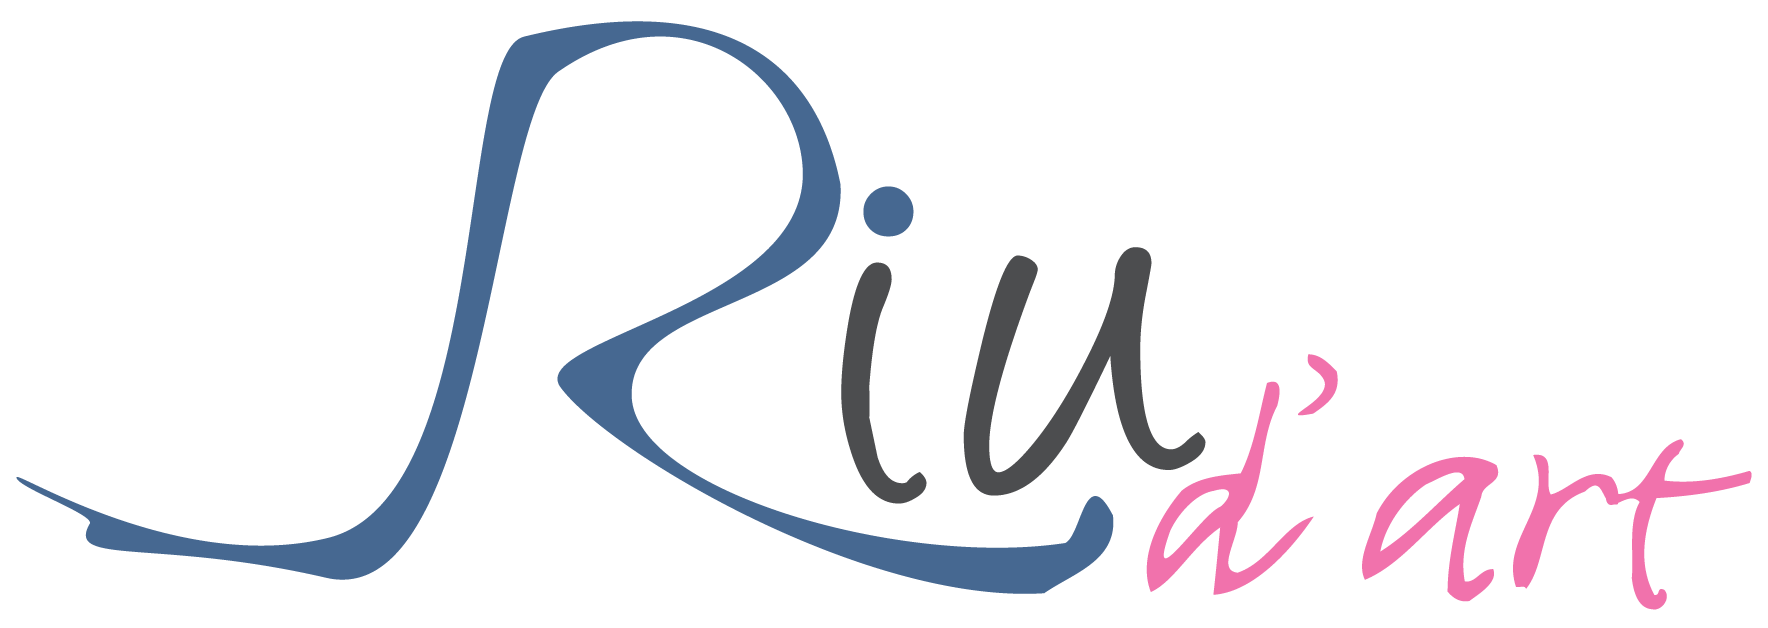 Riu Logo - About the project - Riu d'art